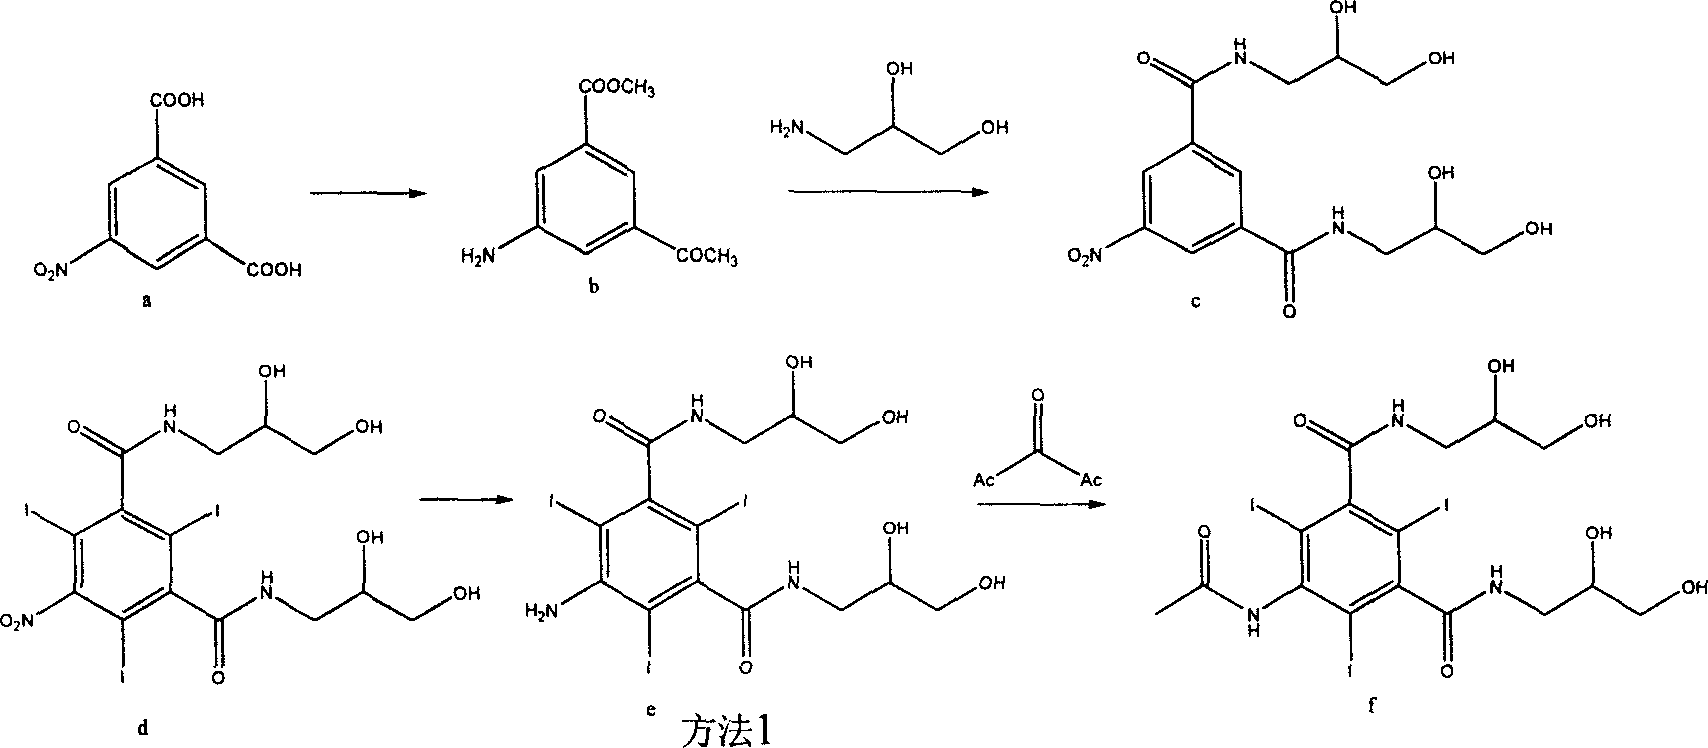 Process for preparing 5-acetamino-N,N'-bis (2,3-dihydroxypropyl)-2,4,6-tri-iodo isophthalamide